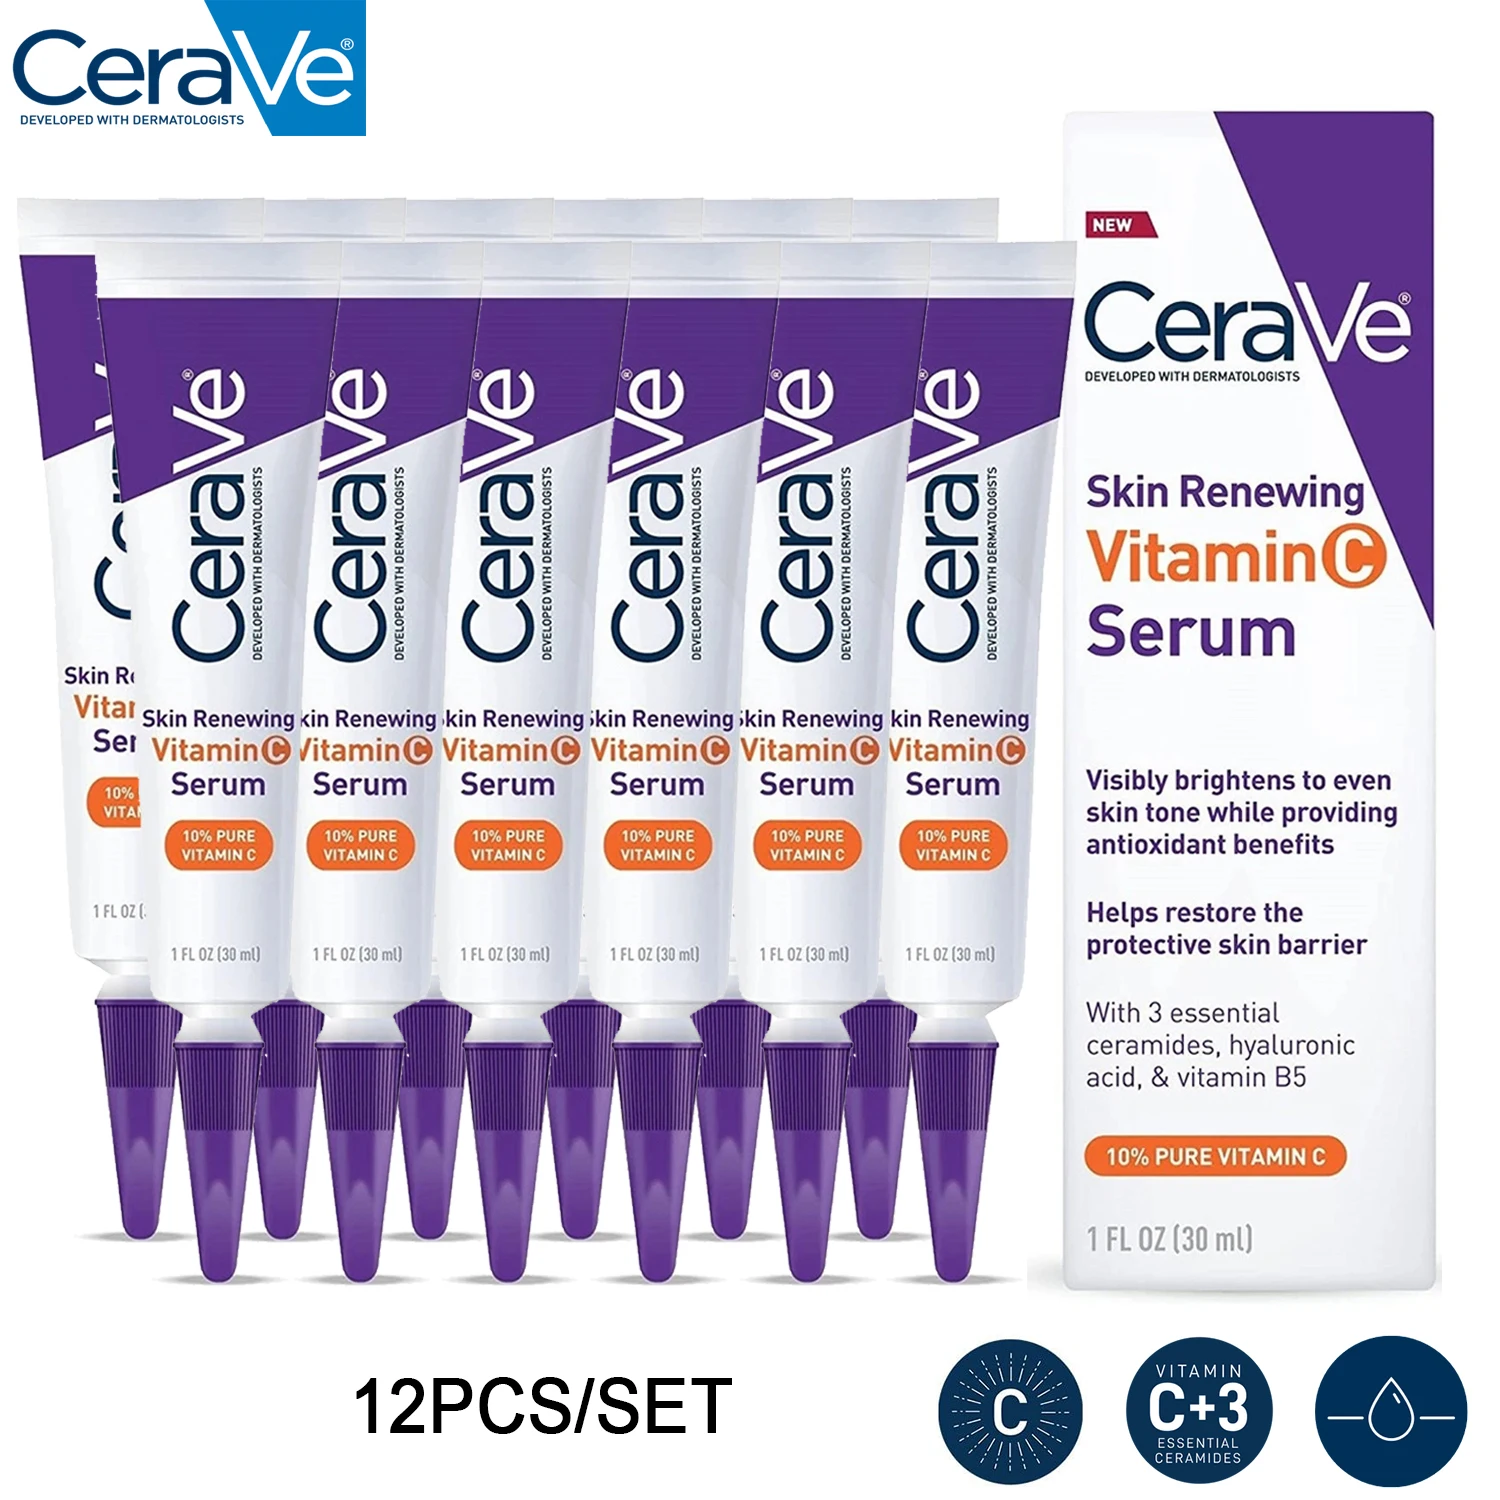 

12PCS 30ML CeraVe Pure 10% VC Serum Skin Renewing Vitamin C Brightening Even Skin Tone Antioxidant With Ceramide Restore Barrier